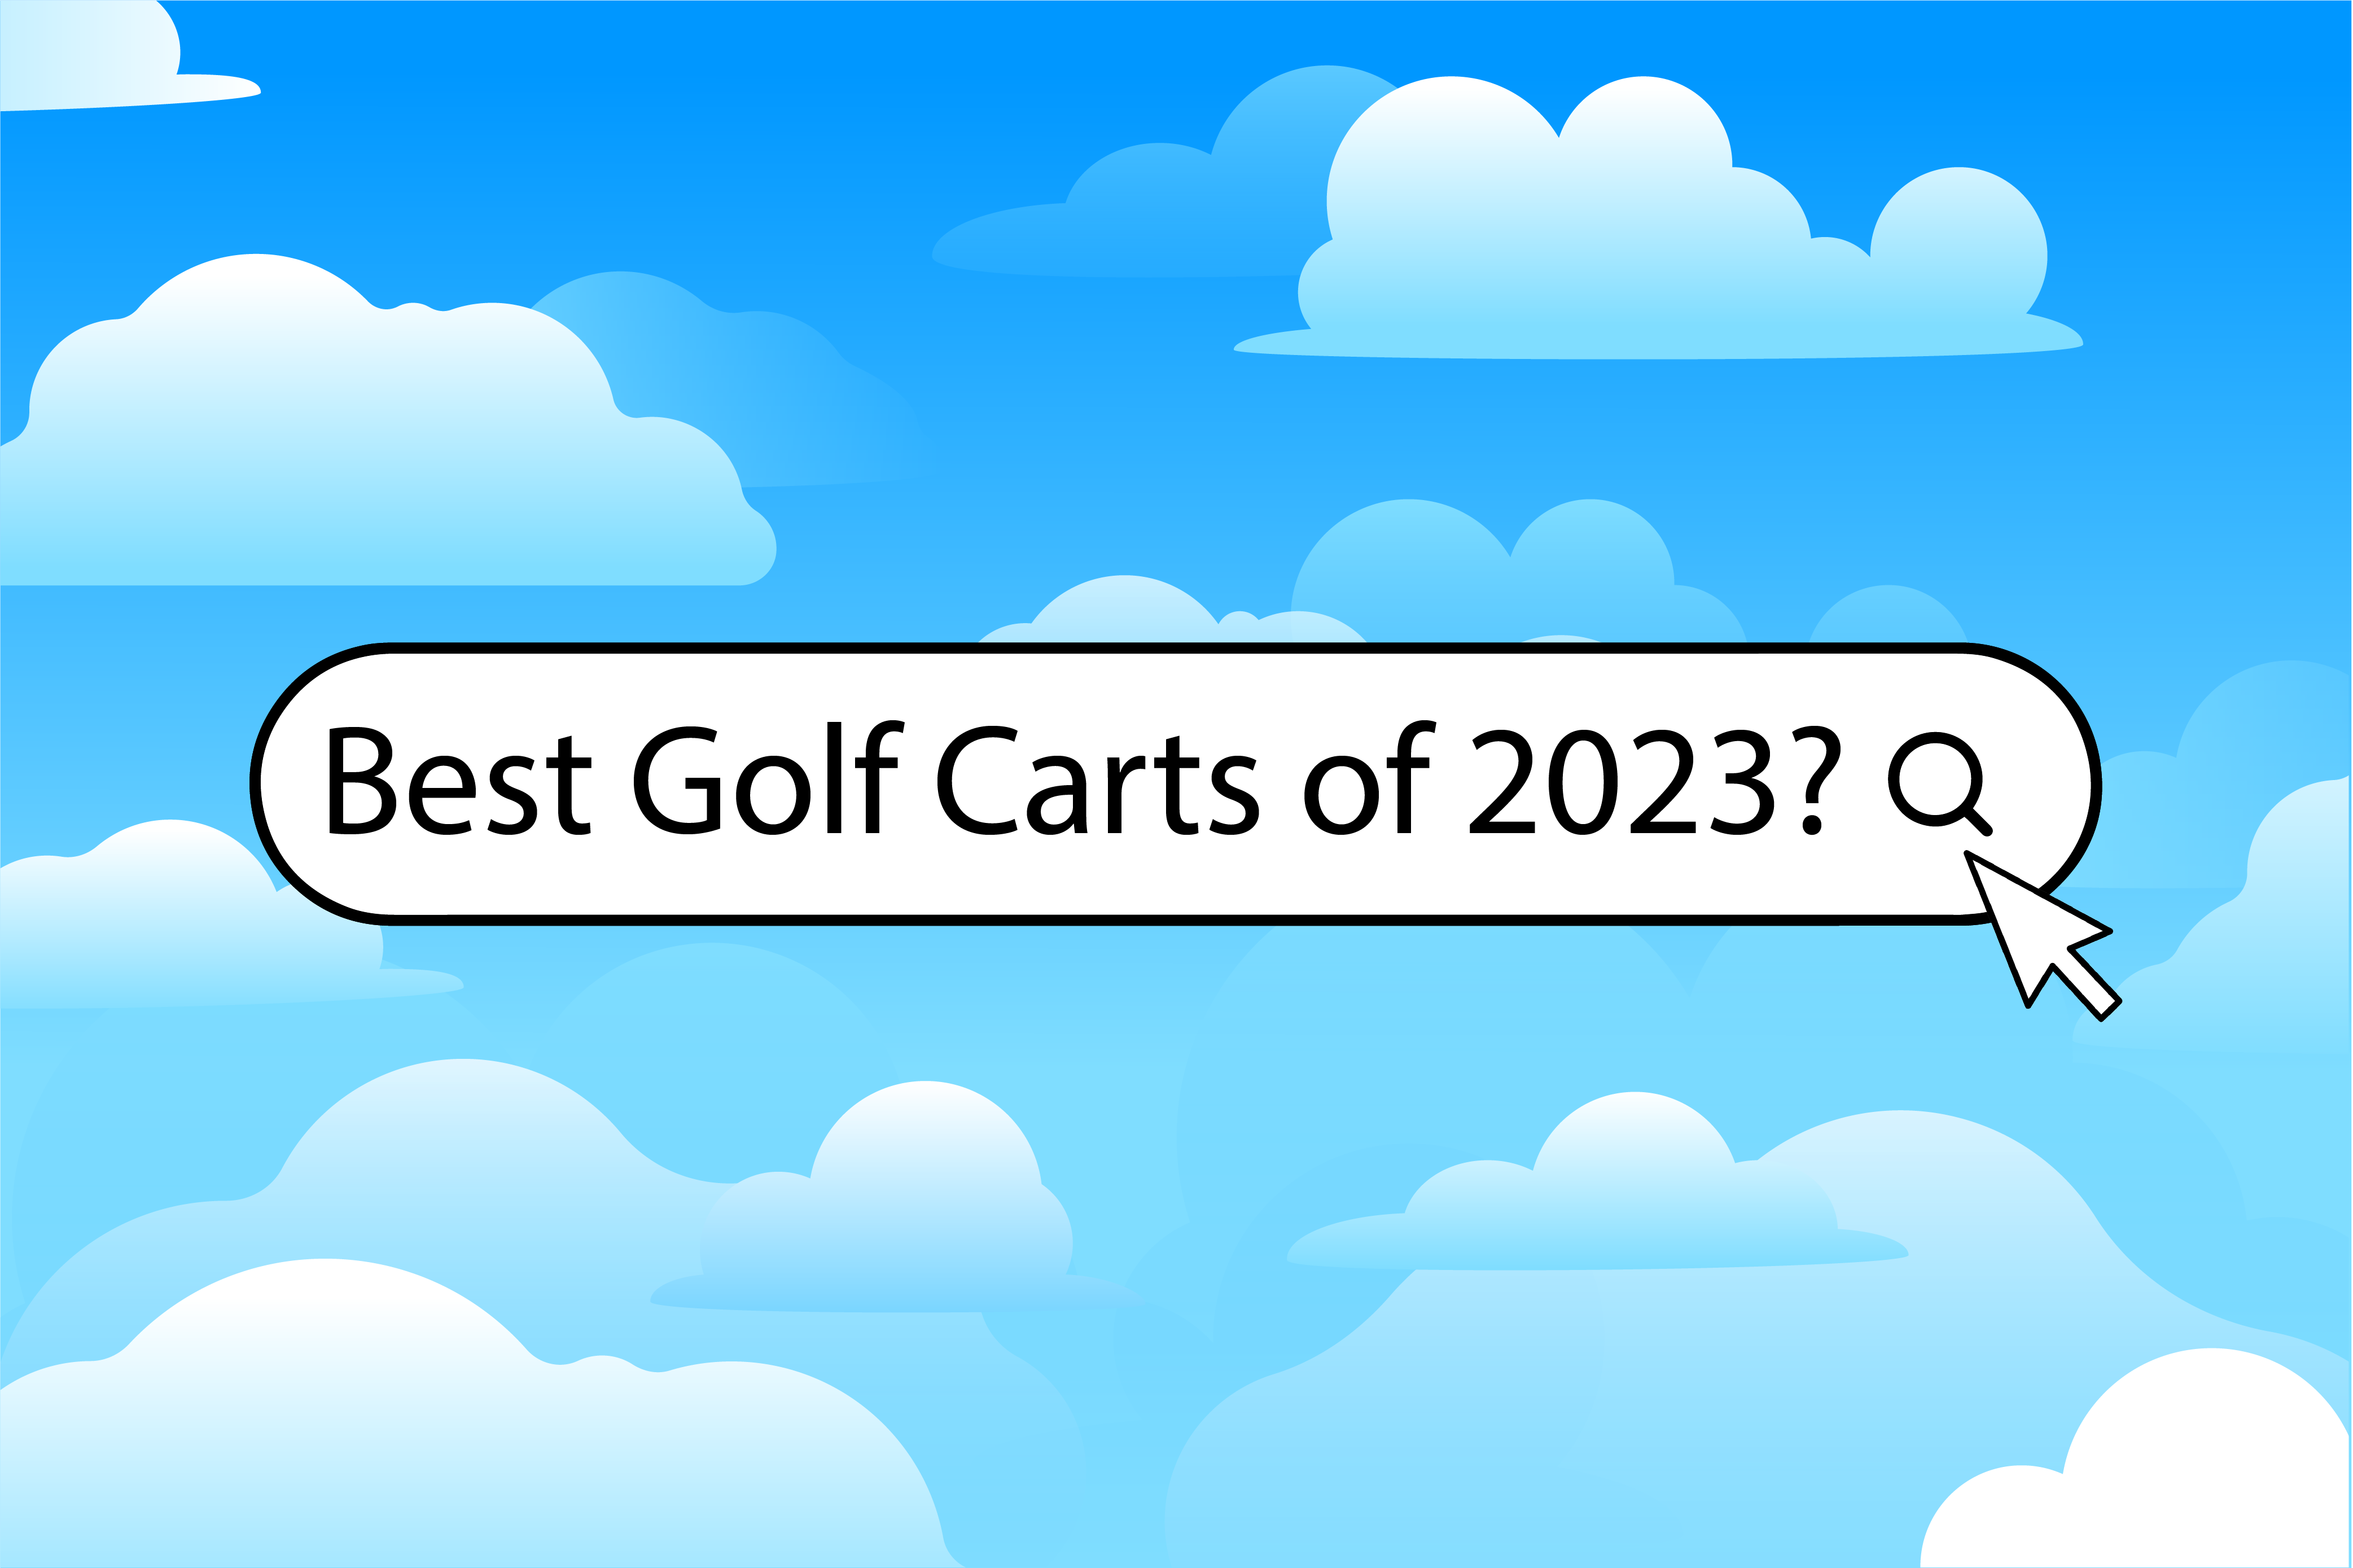 Best Golf Carts of 2023